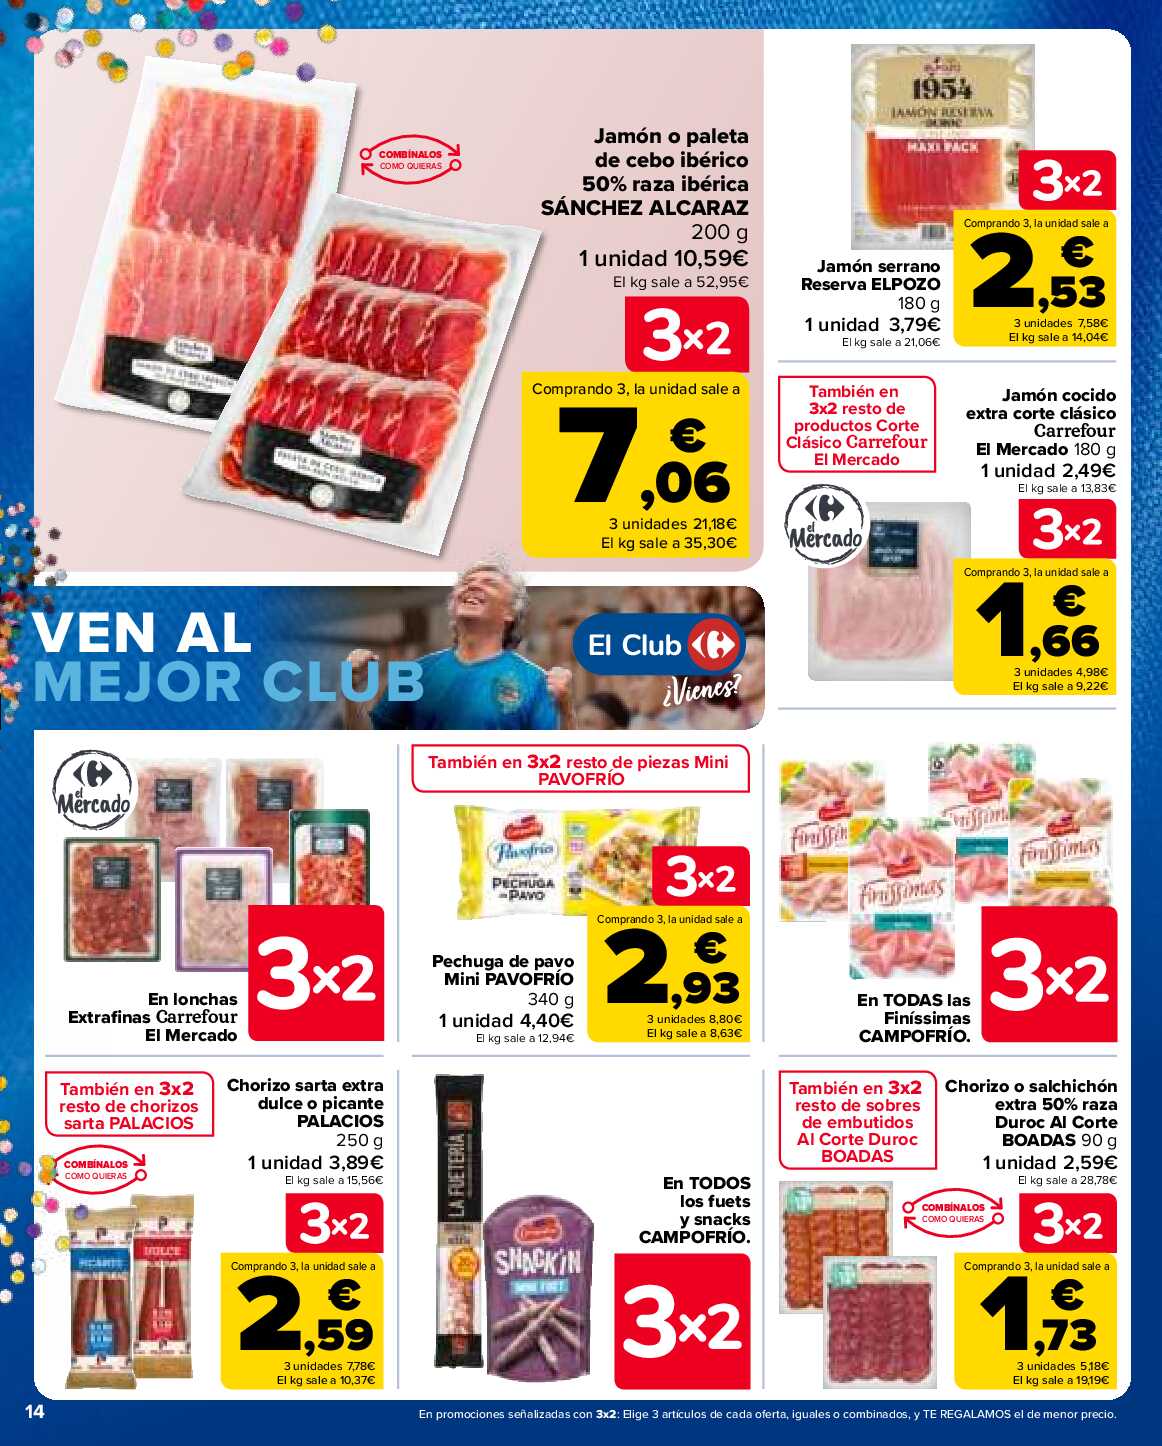 3x2 Carrefour Carrefour. Página 14